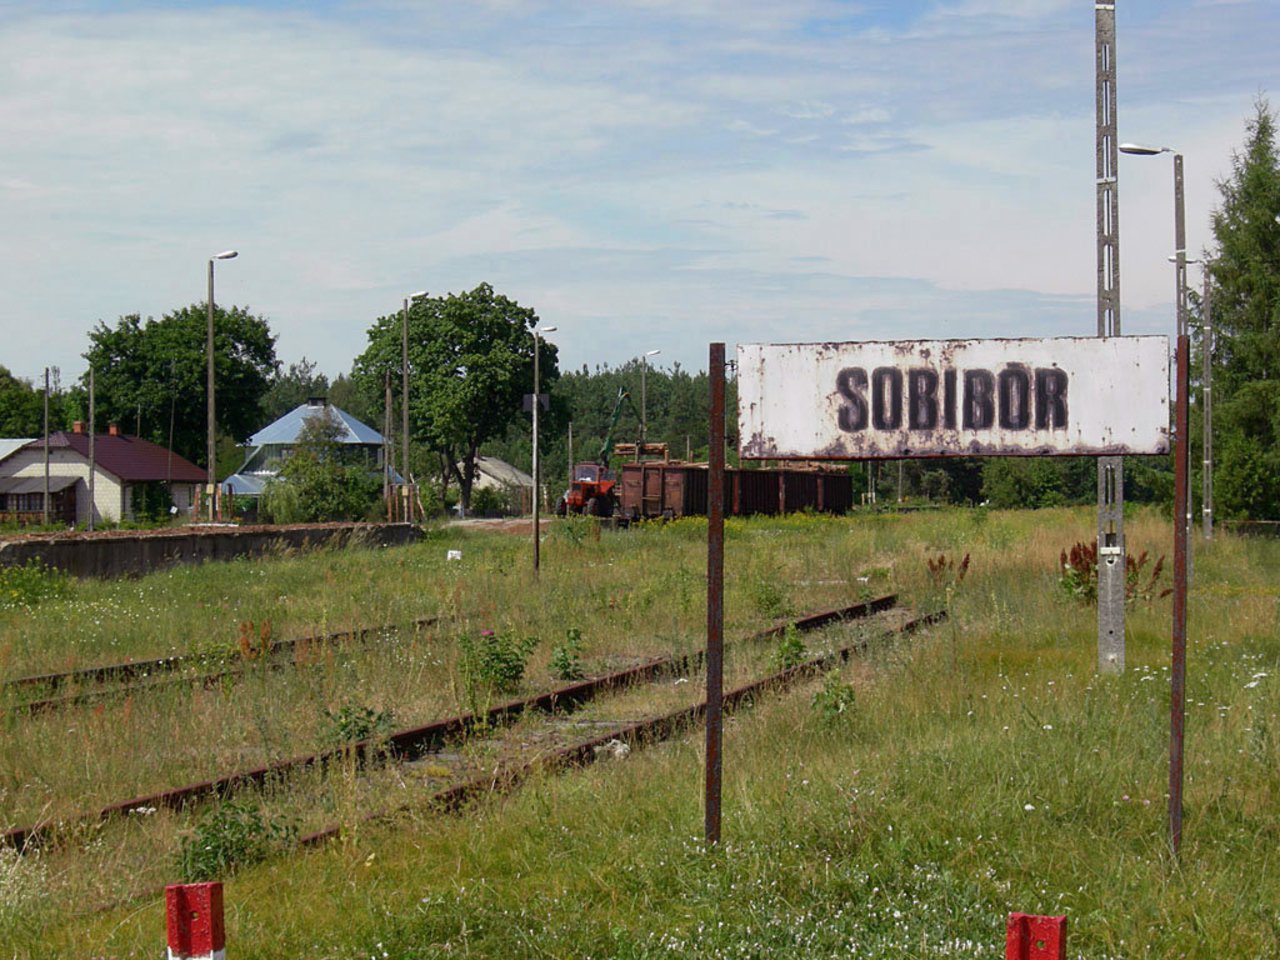  Sobiboro geležinkelio stotis.